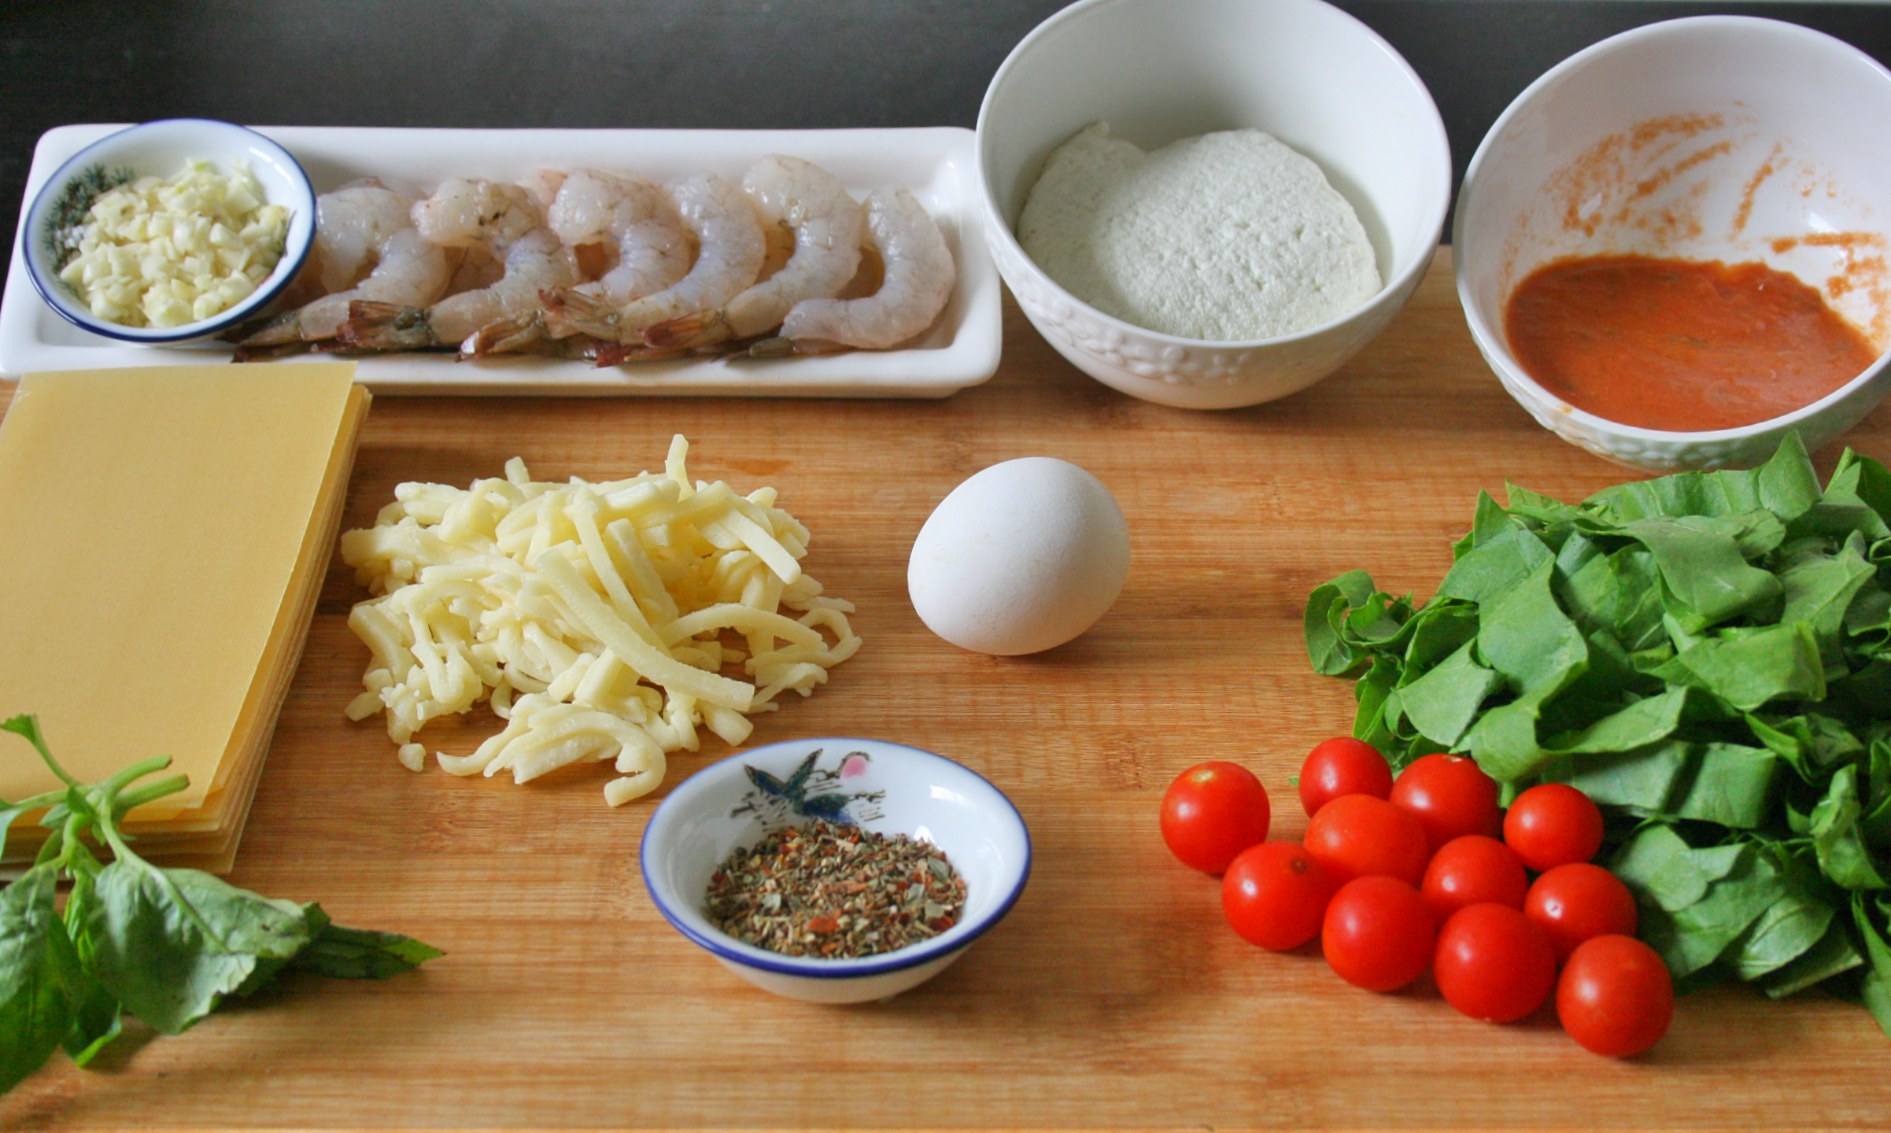 Ingredients Prawn Lasagna Roll ups